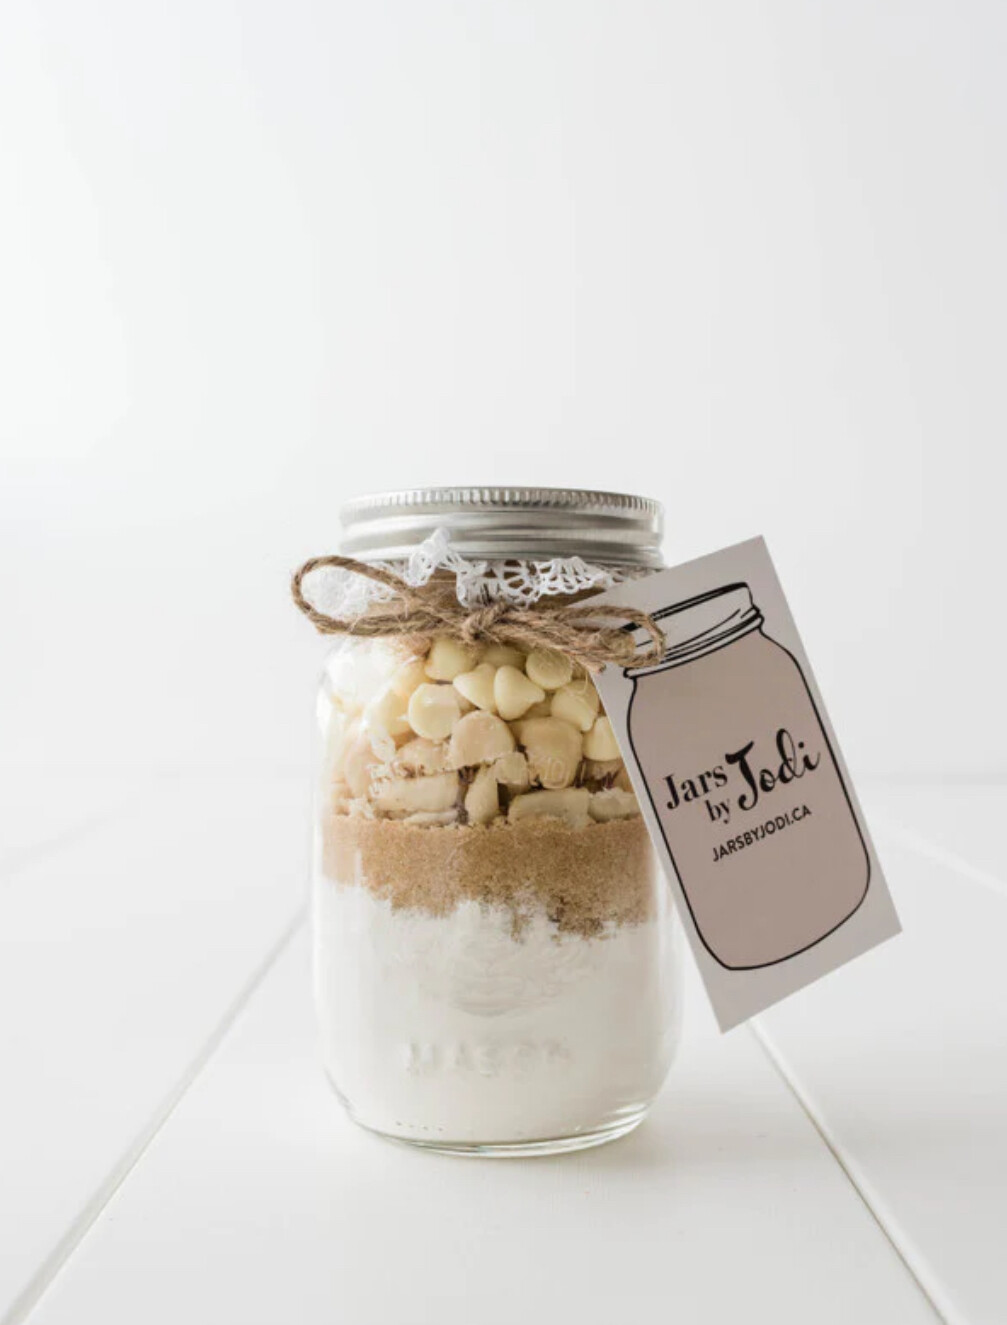 Jars by Jodi White Chocolate Macadamia Nut Cookie Mix